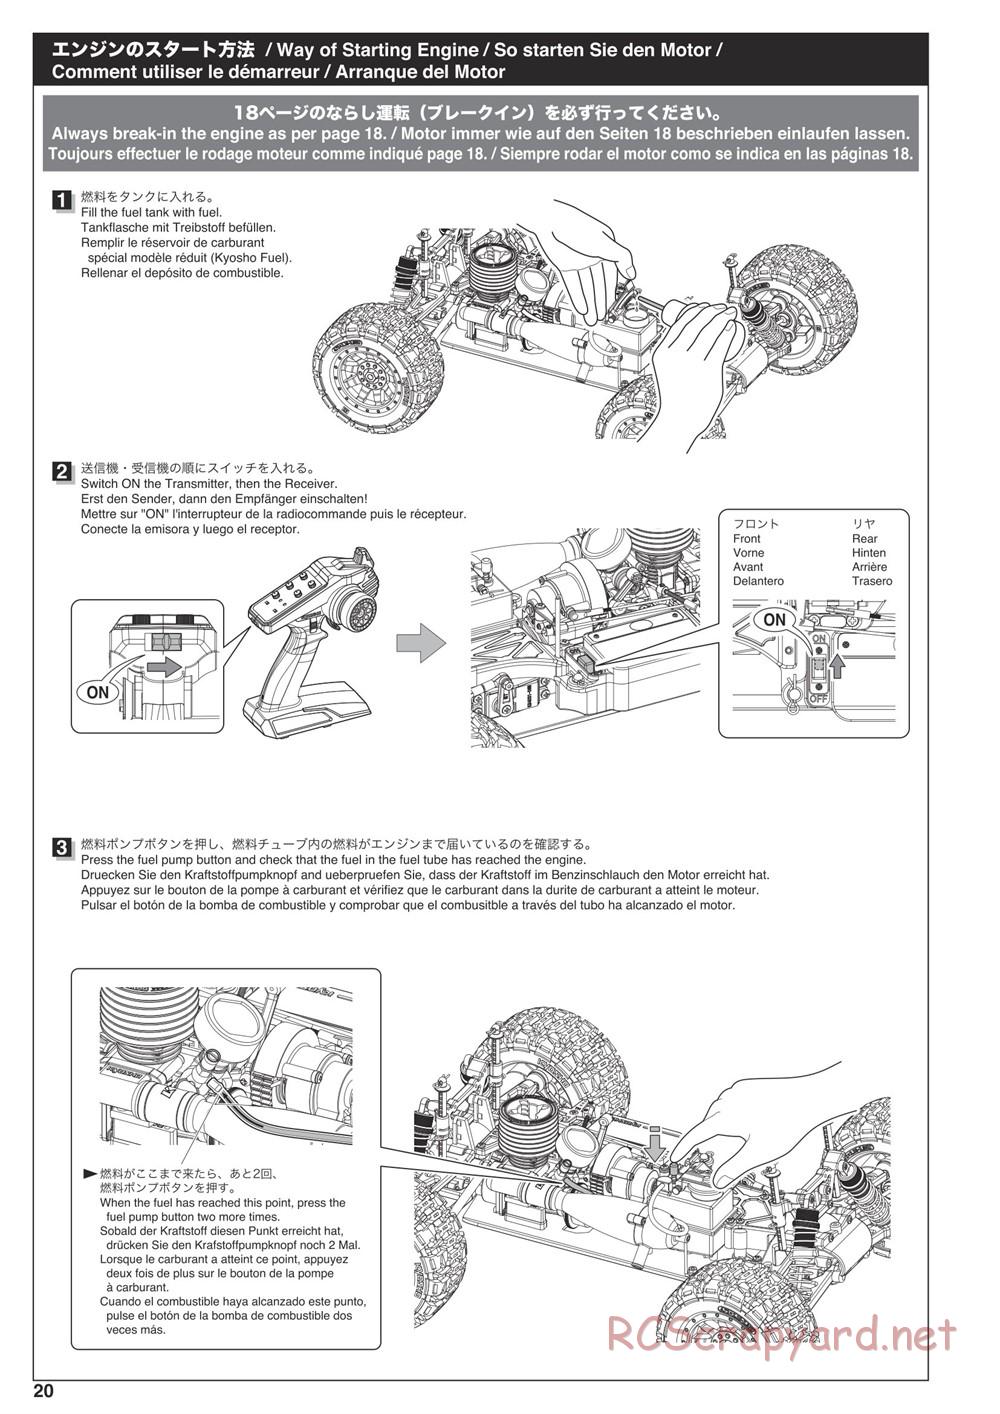 Kyosho - Nitro Tracker (2019) - Manual - Page 20